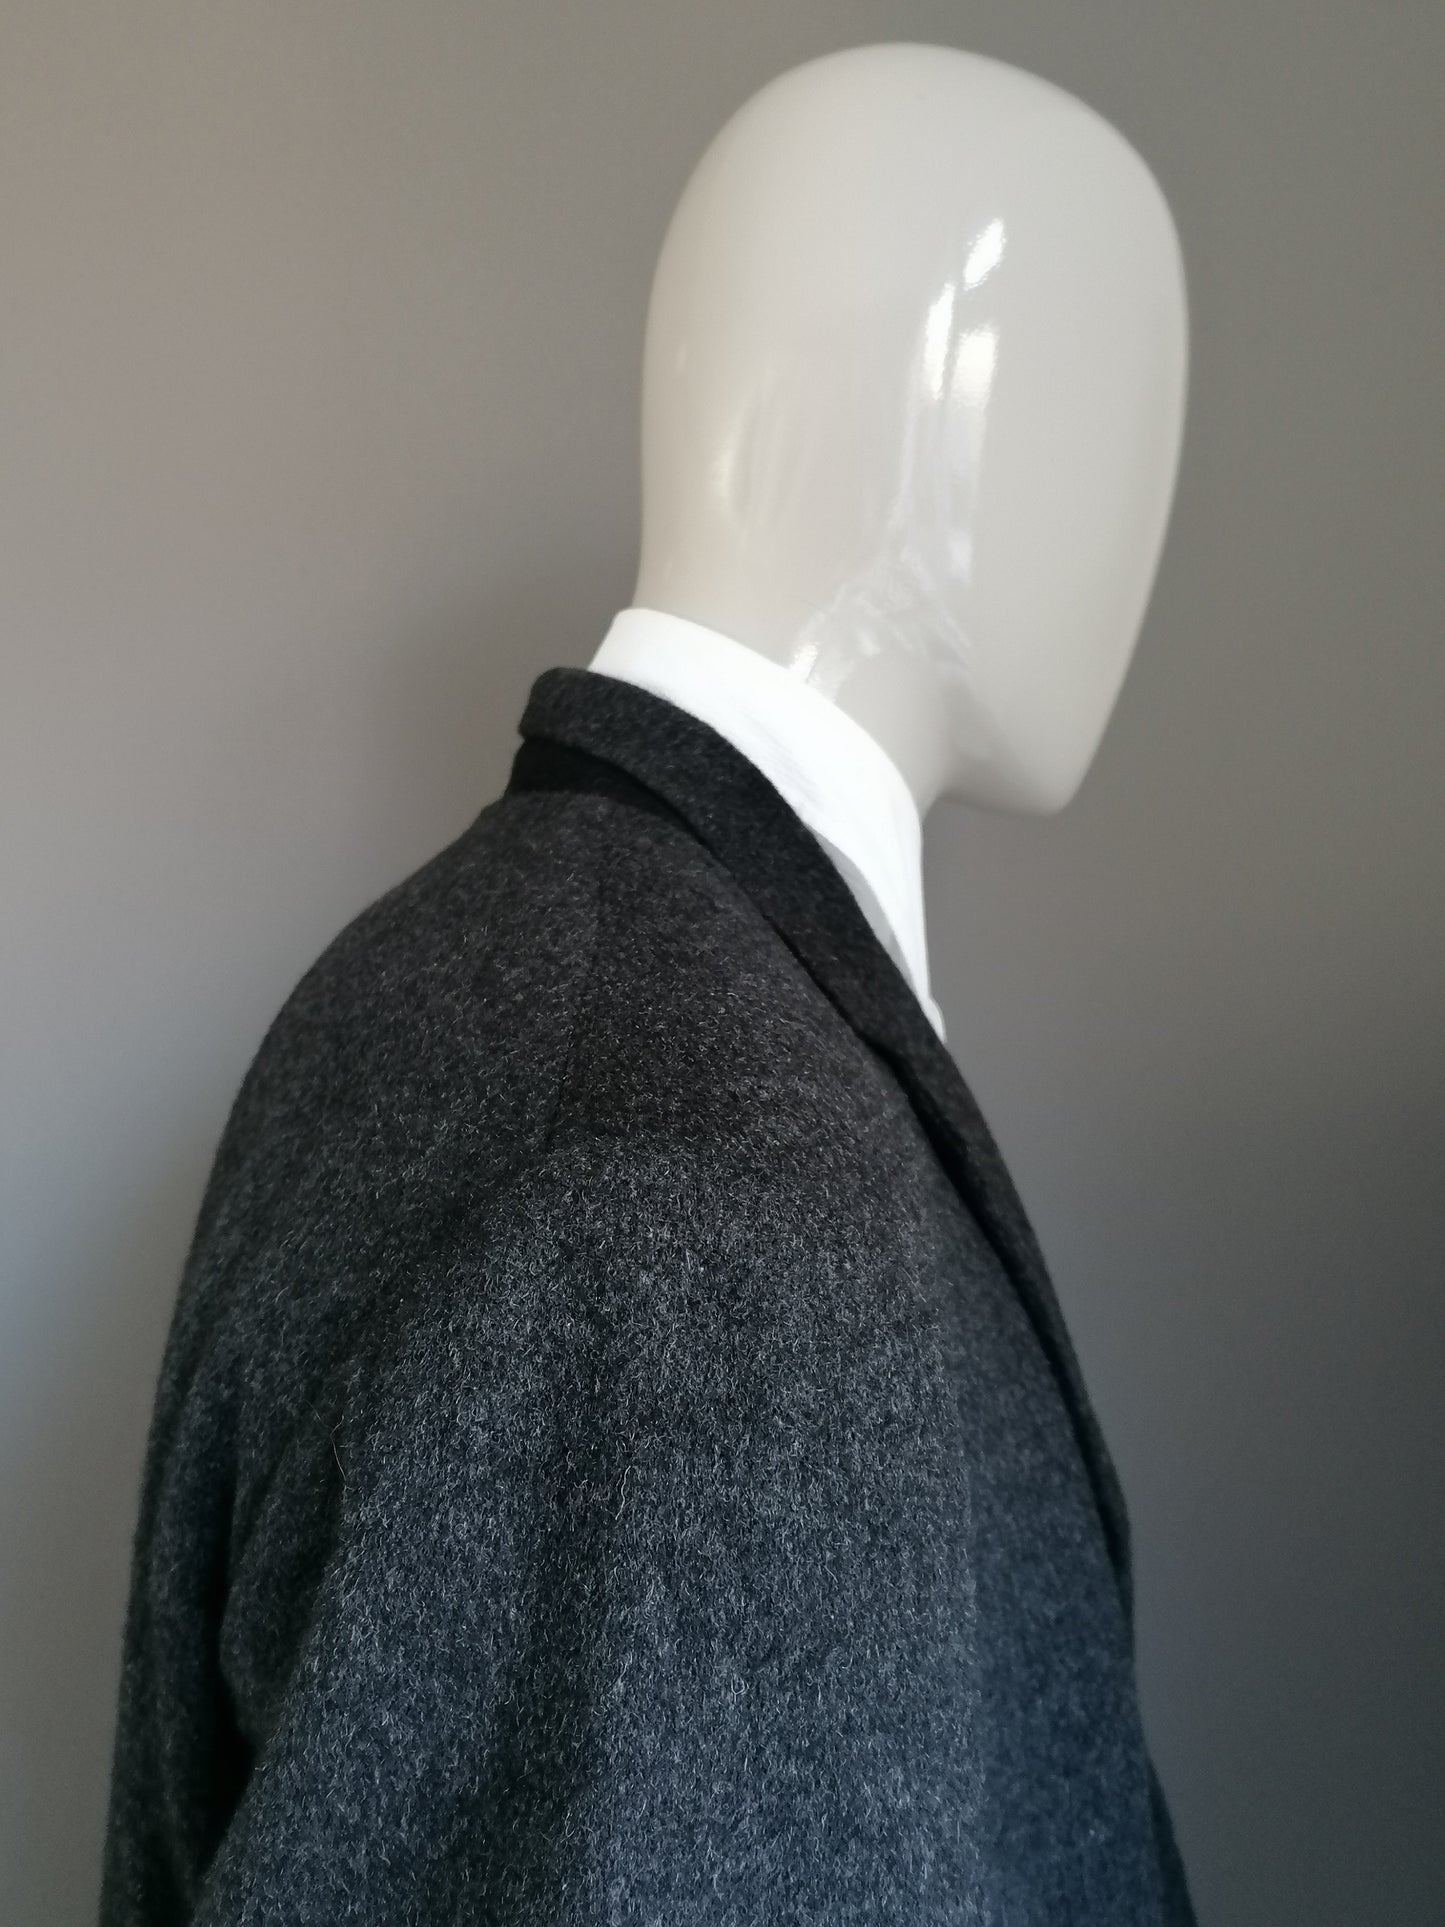 Polo by Ralph Lauren Woolen jacket. Dark gray colored. Size 56 / XL.